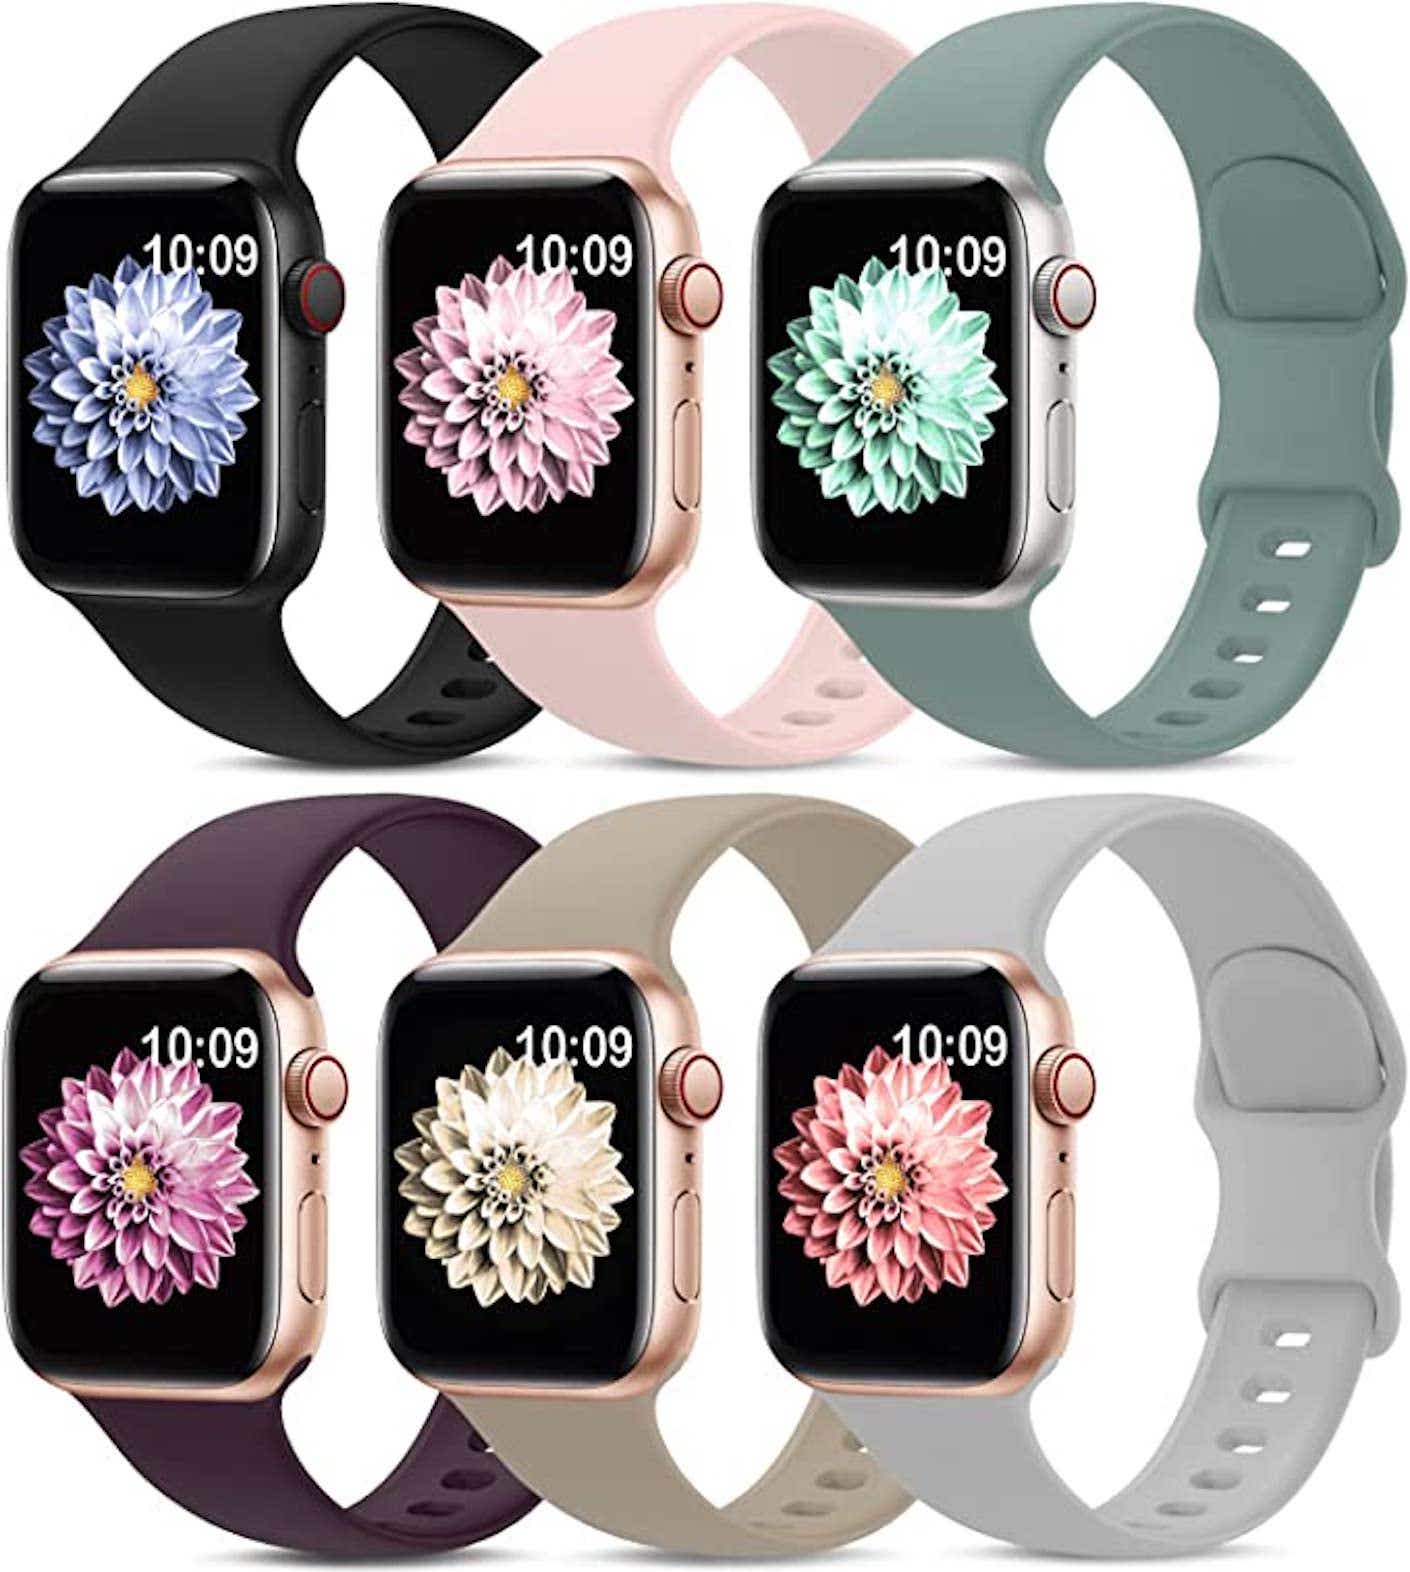 6 apple watch bands